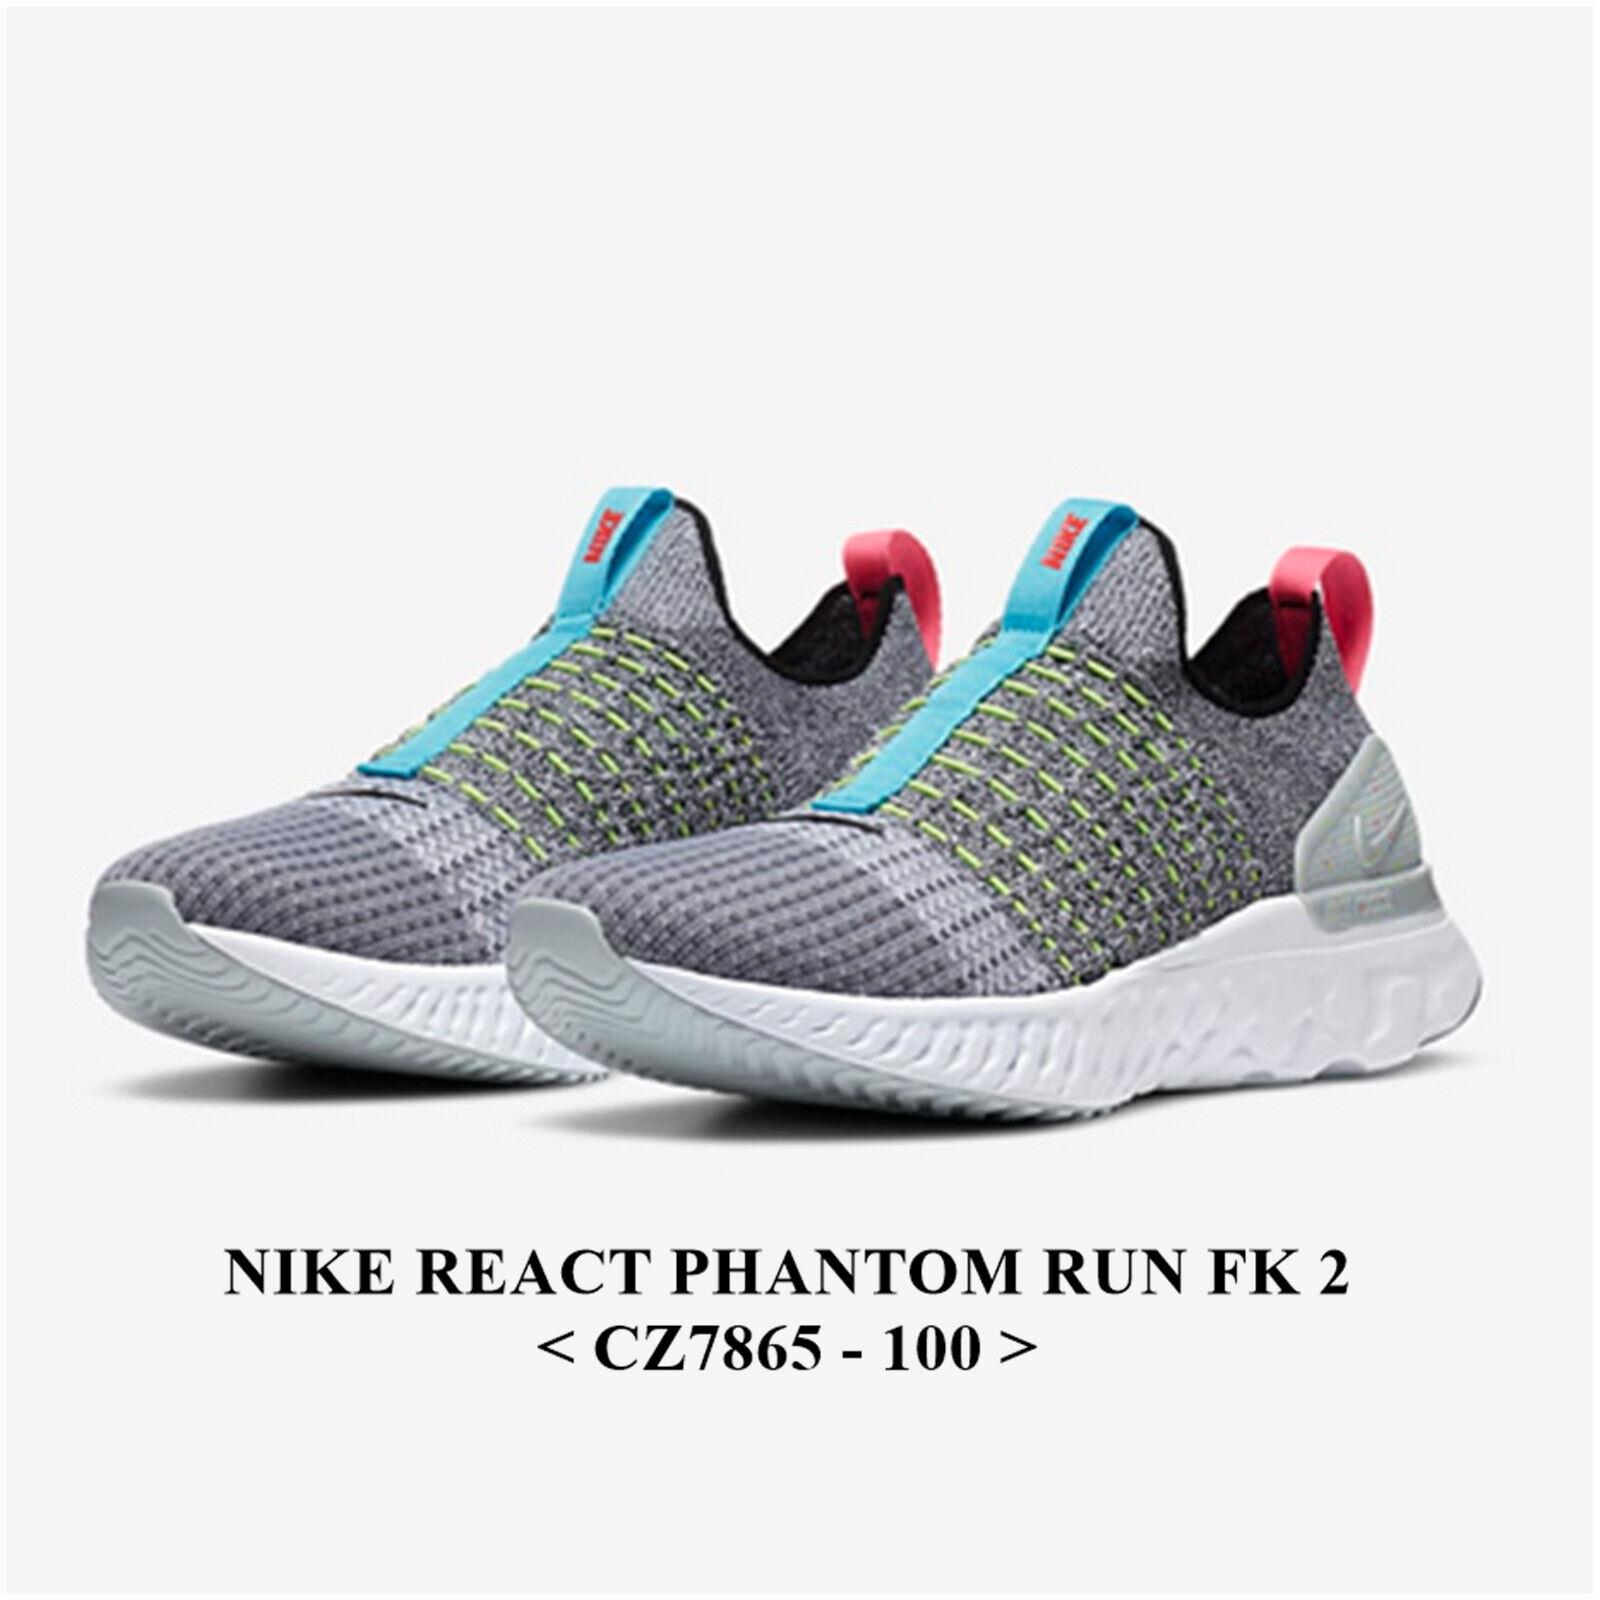 Nike React Phantom Run FK 2 CZ7865 - 100 Men`s Running Shoes - GREY